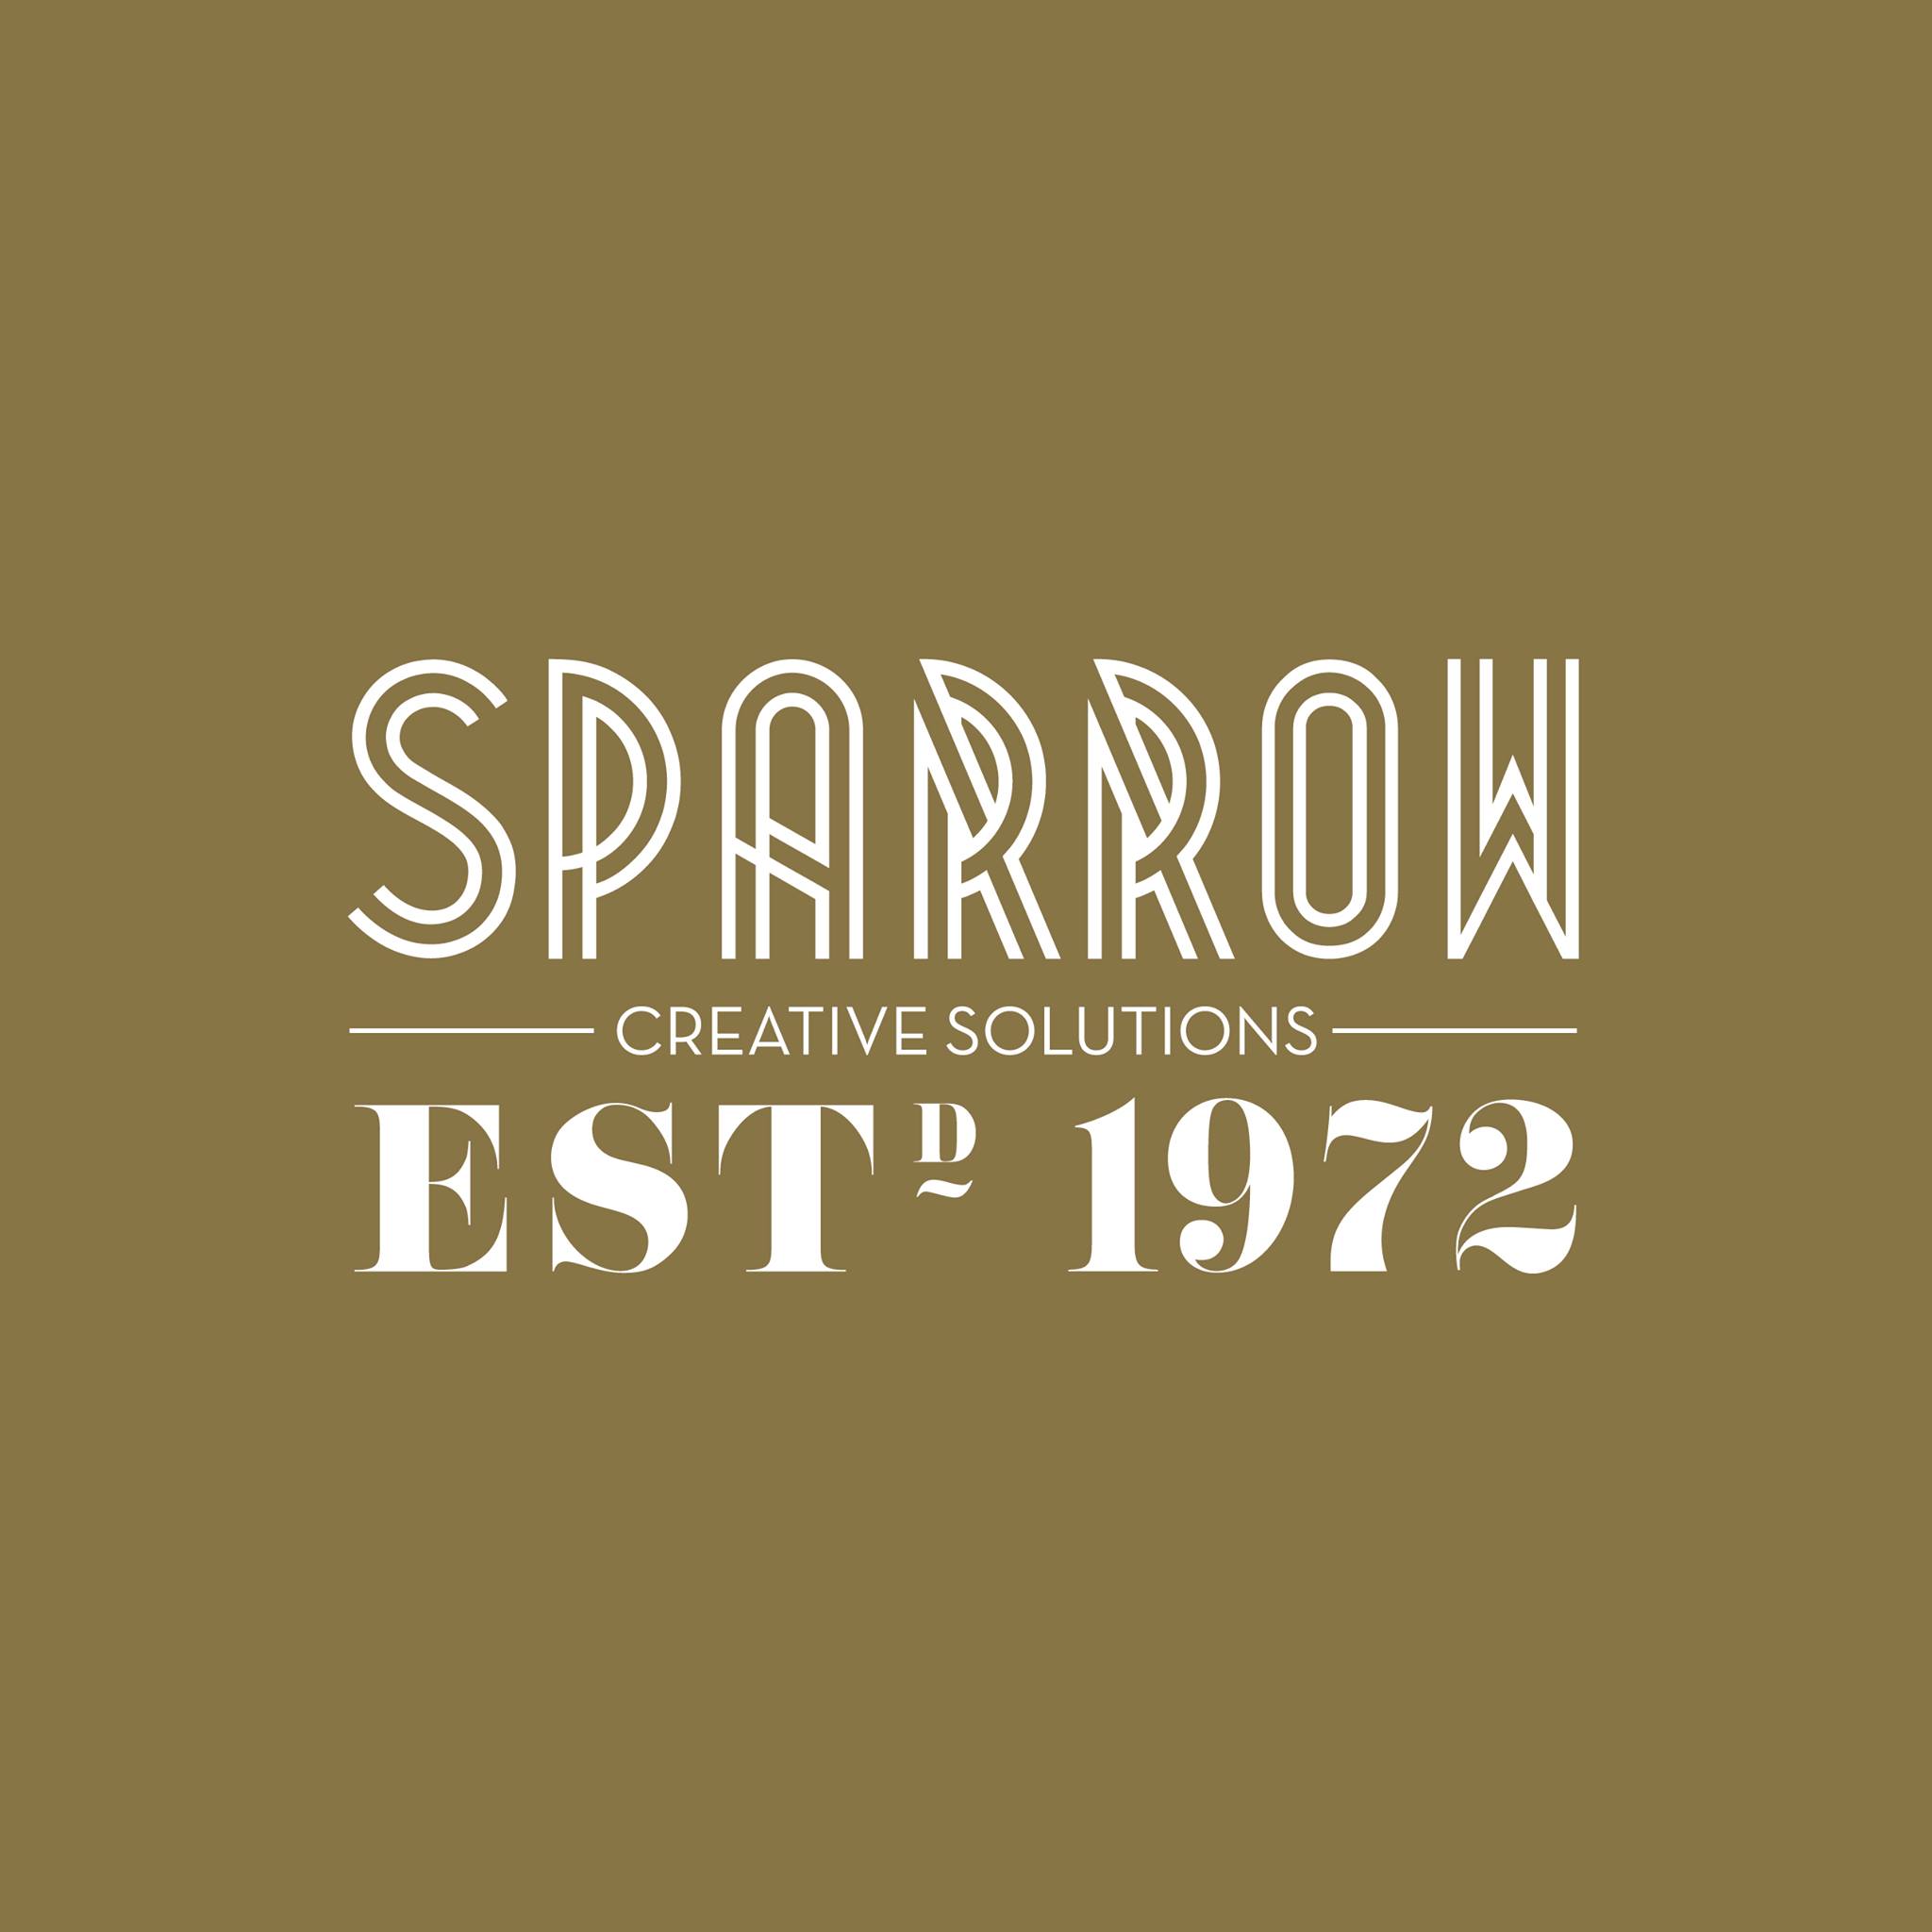 Sparrow Creative Solutions